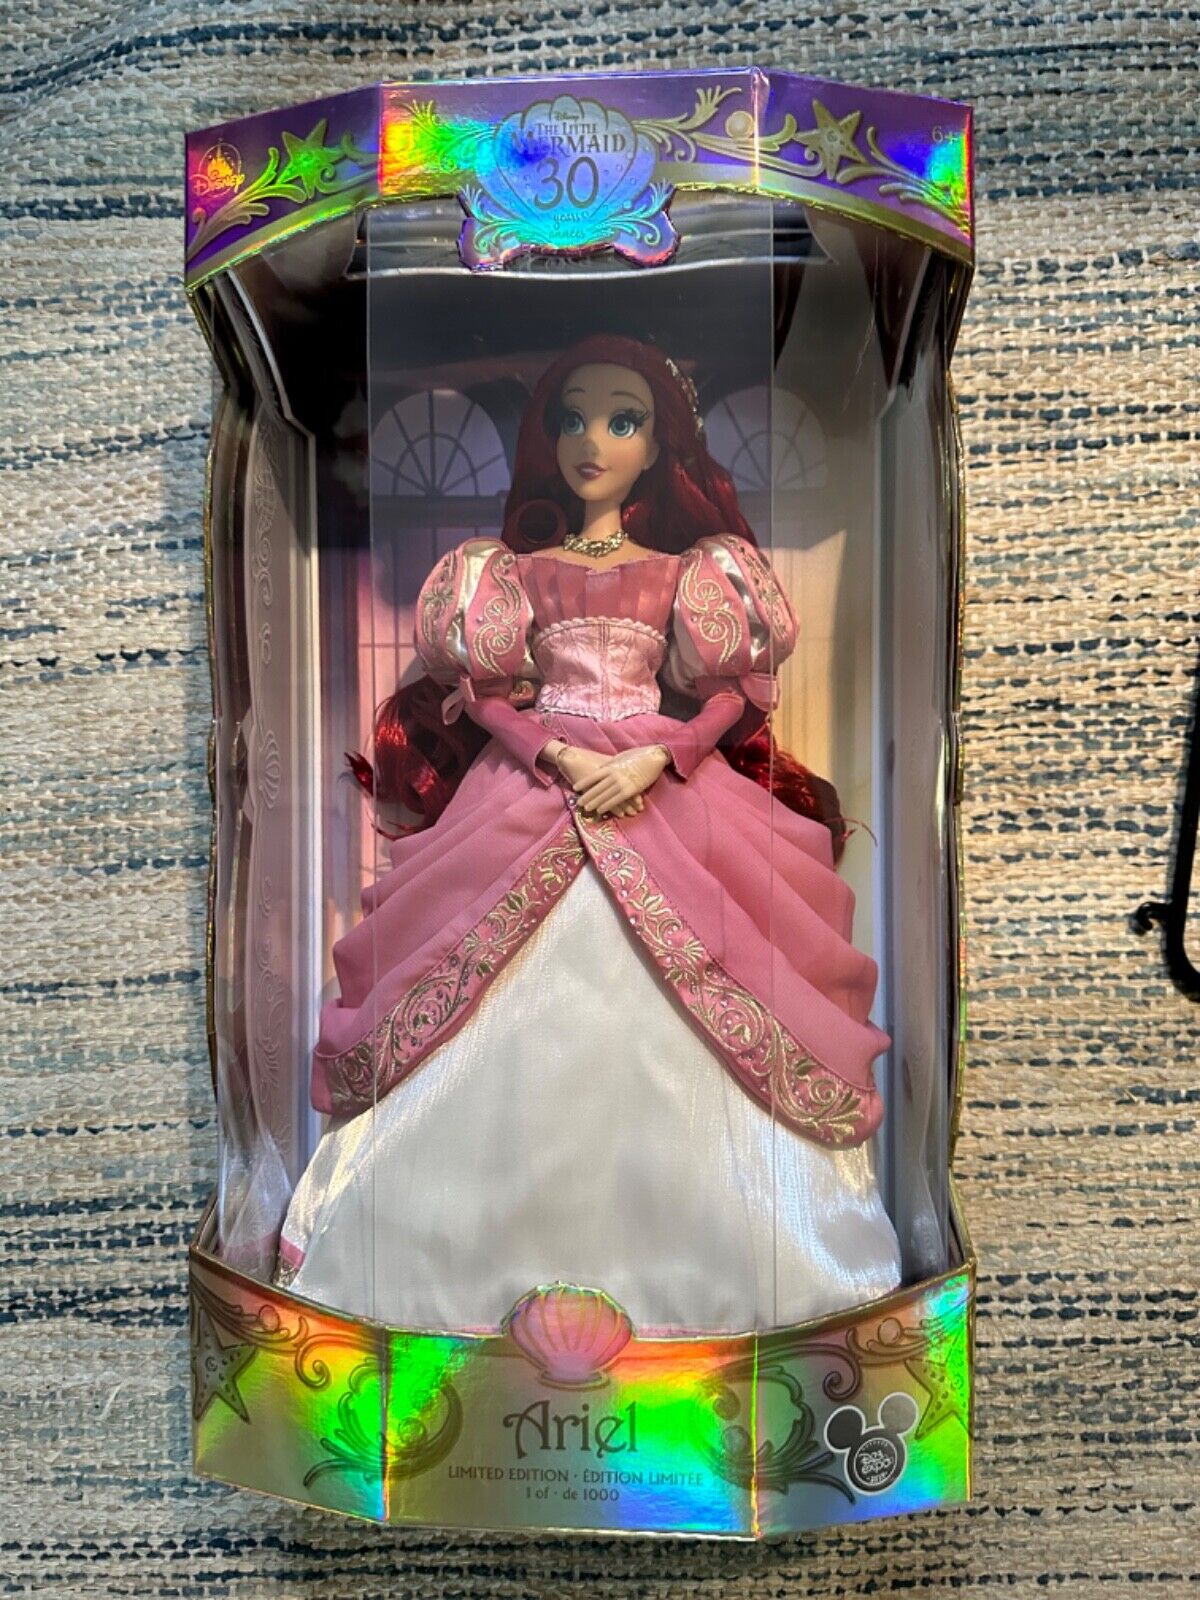 Disney 2019 D23 LE Little Mermaid 30th Anniversary ARIEL 17- inch doll